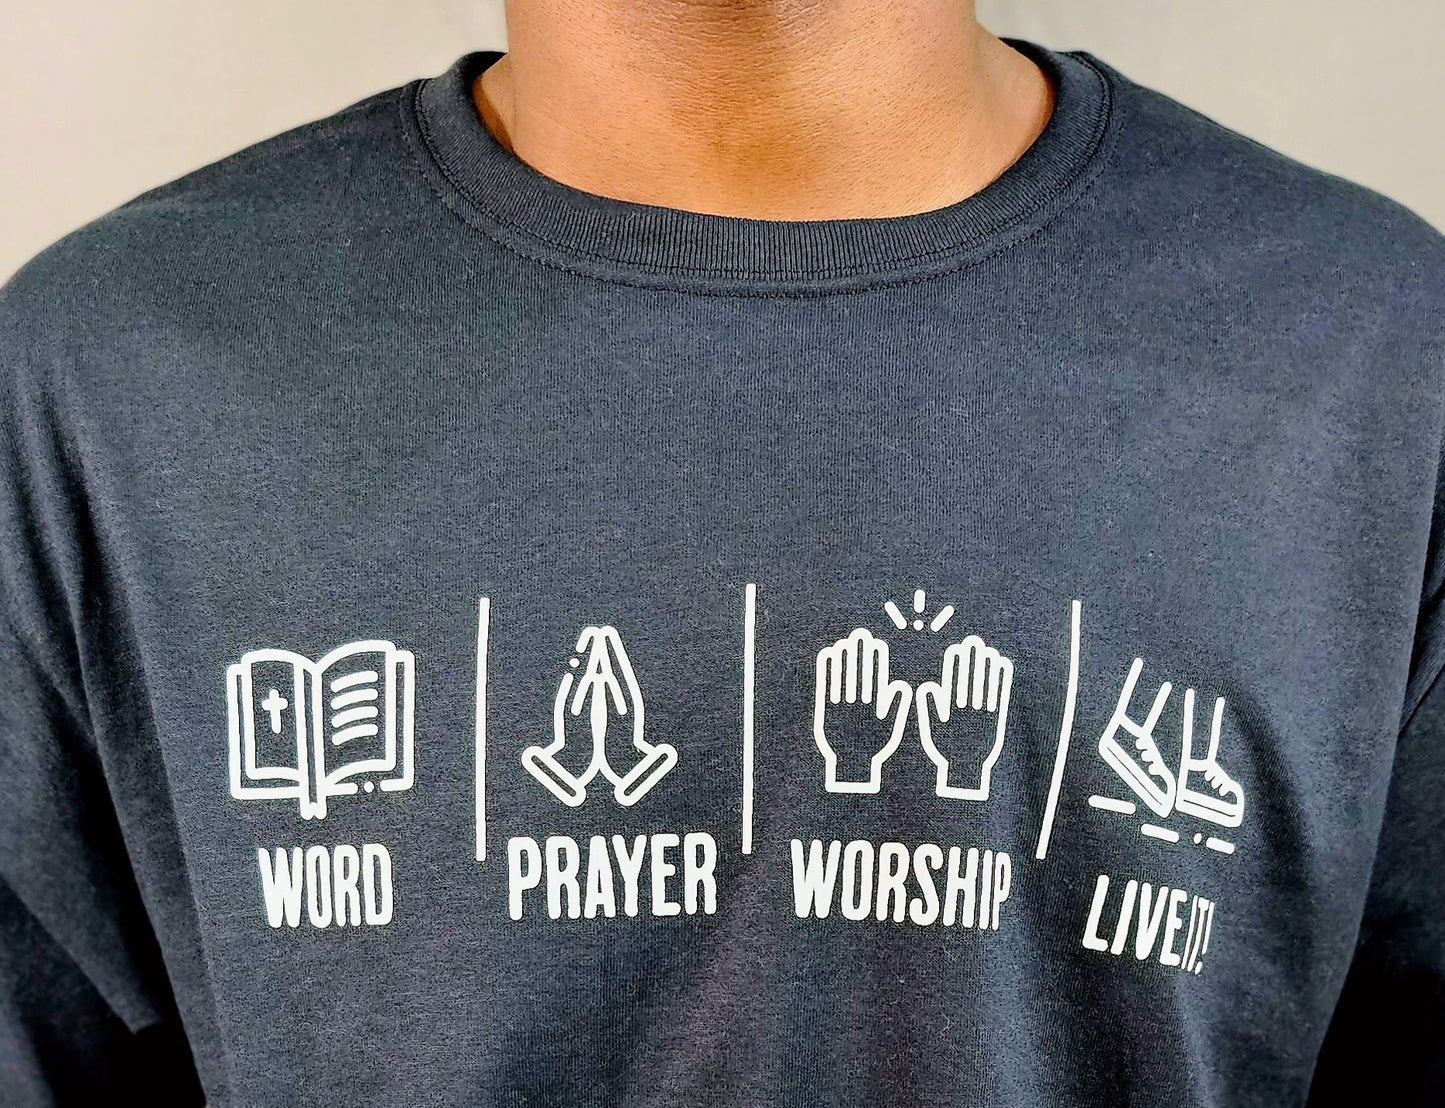 Unisex - Word, Prayer, Worship & Live It! T-Shirt - The Essentials